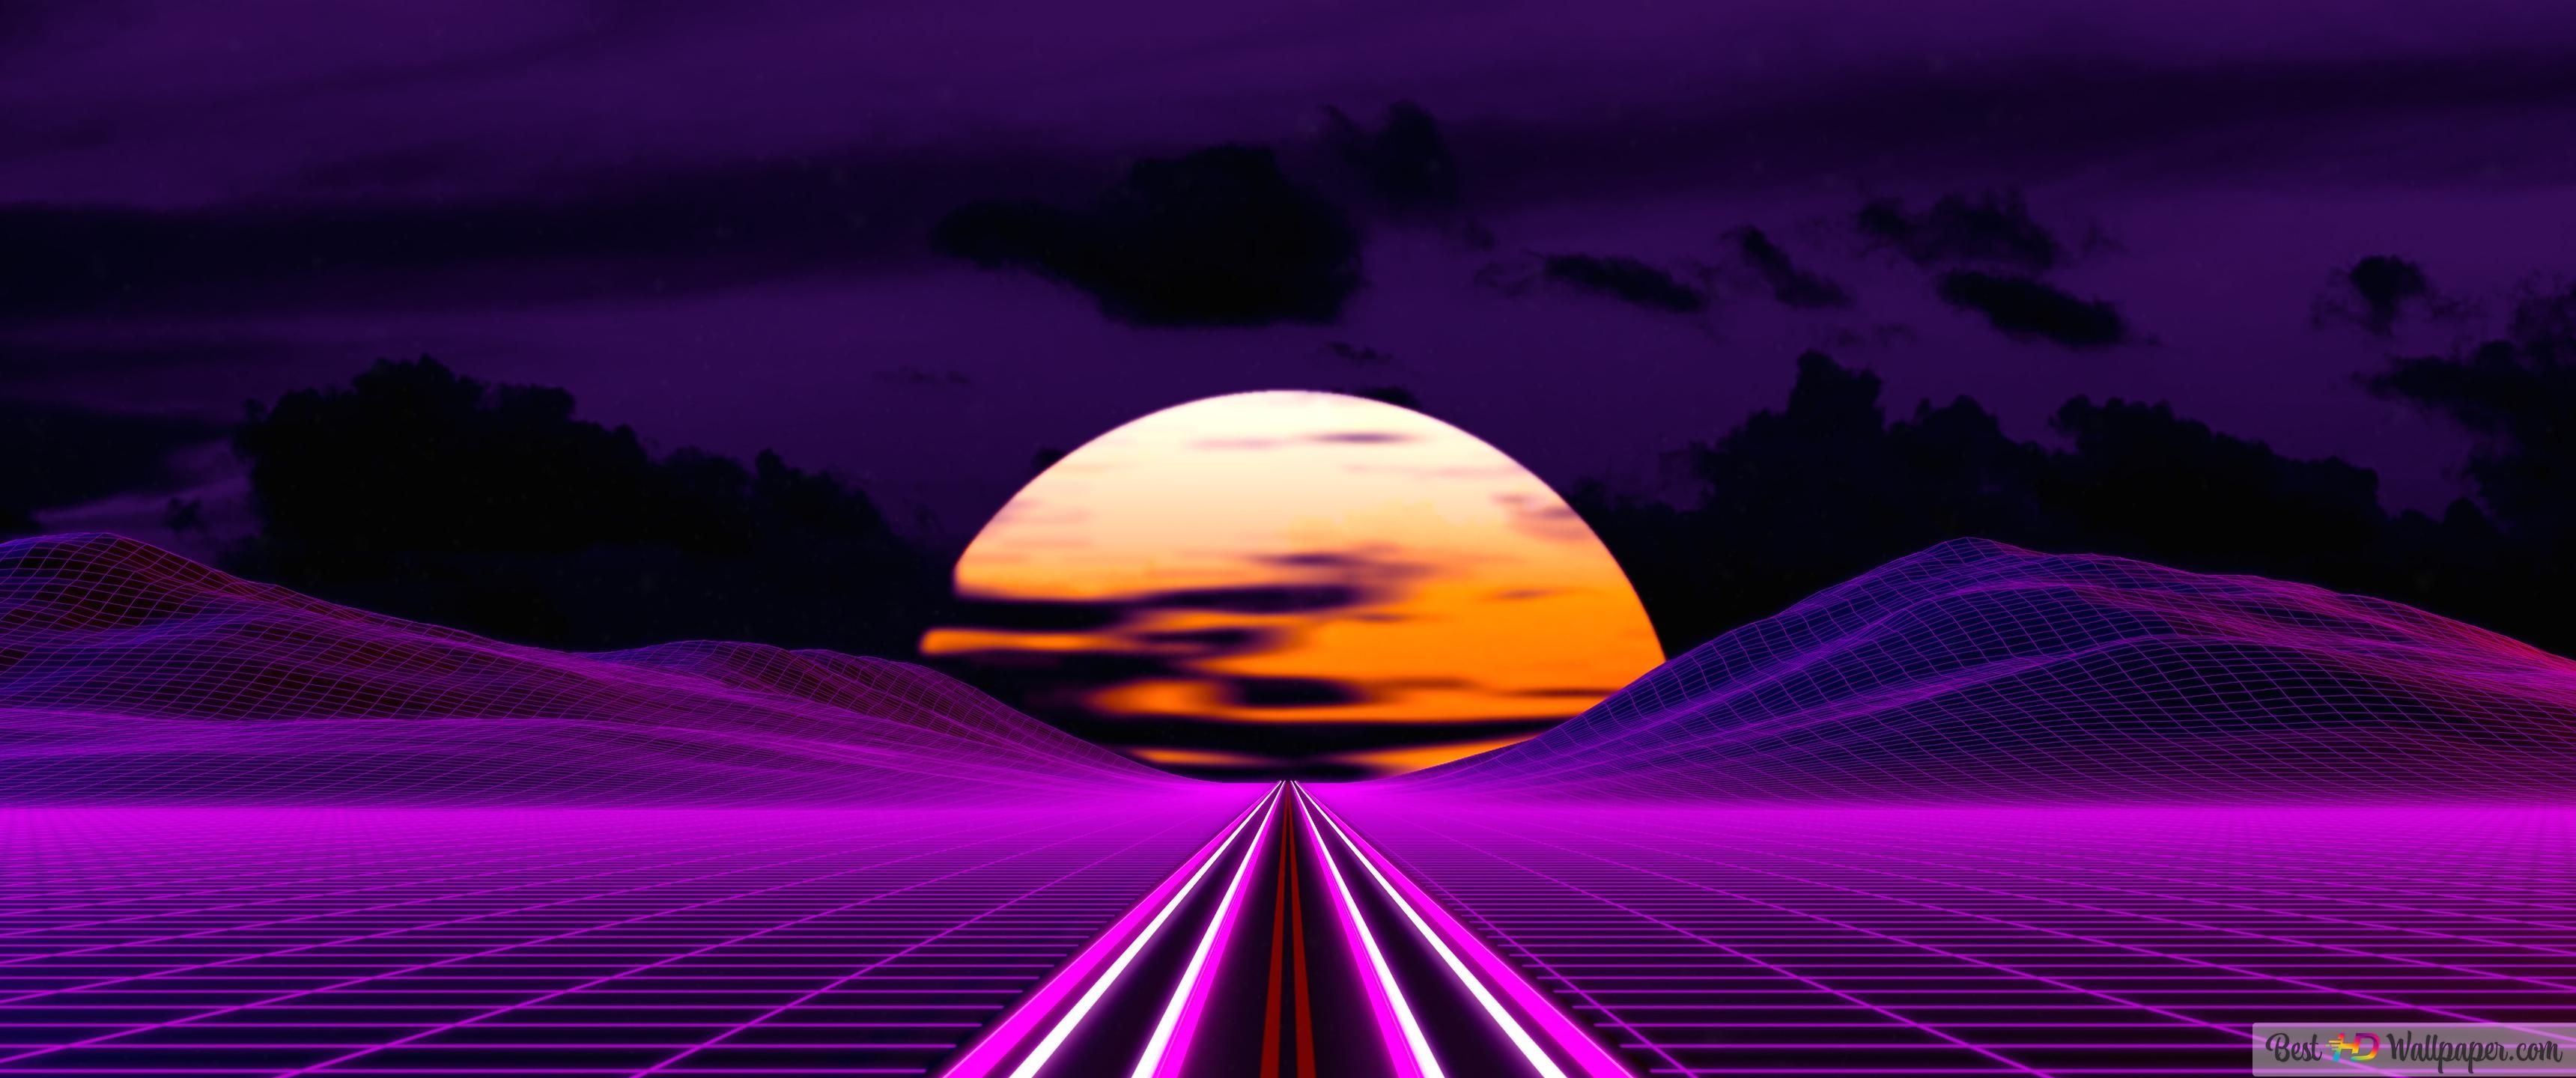 Sunset Synthwave 4K wallpaper download